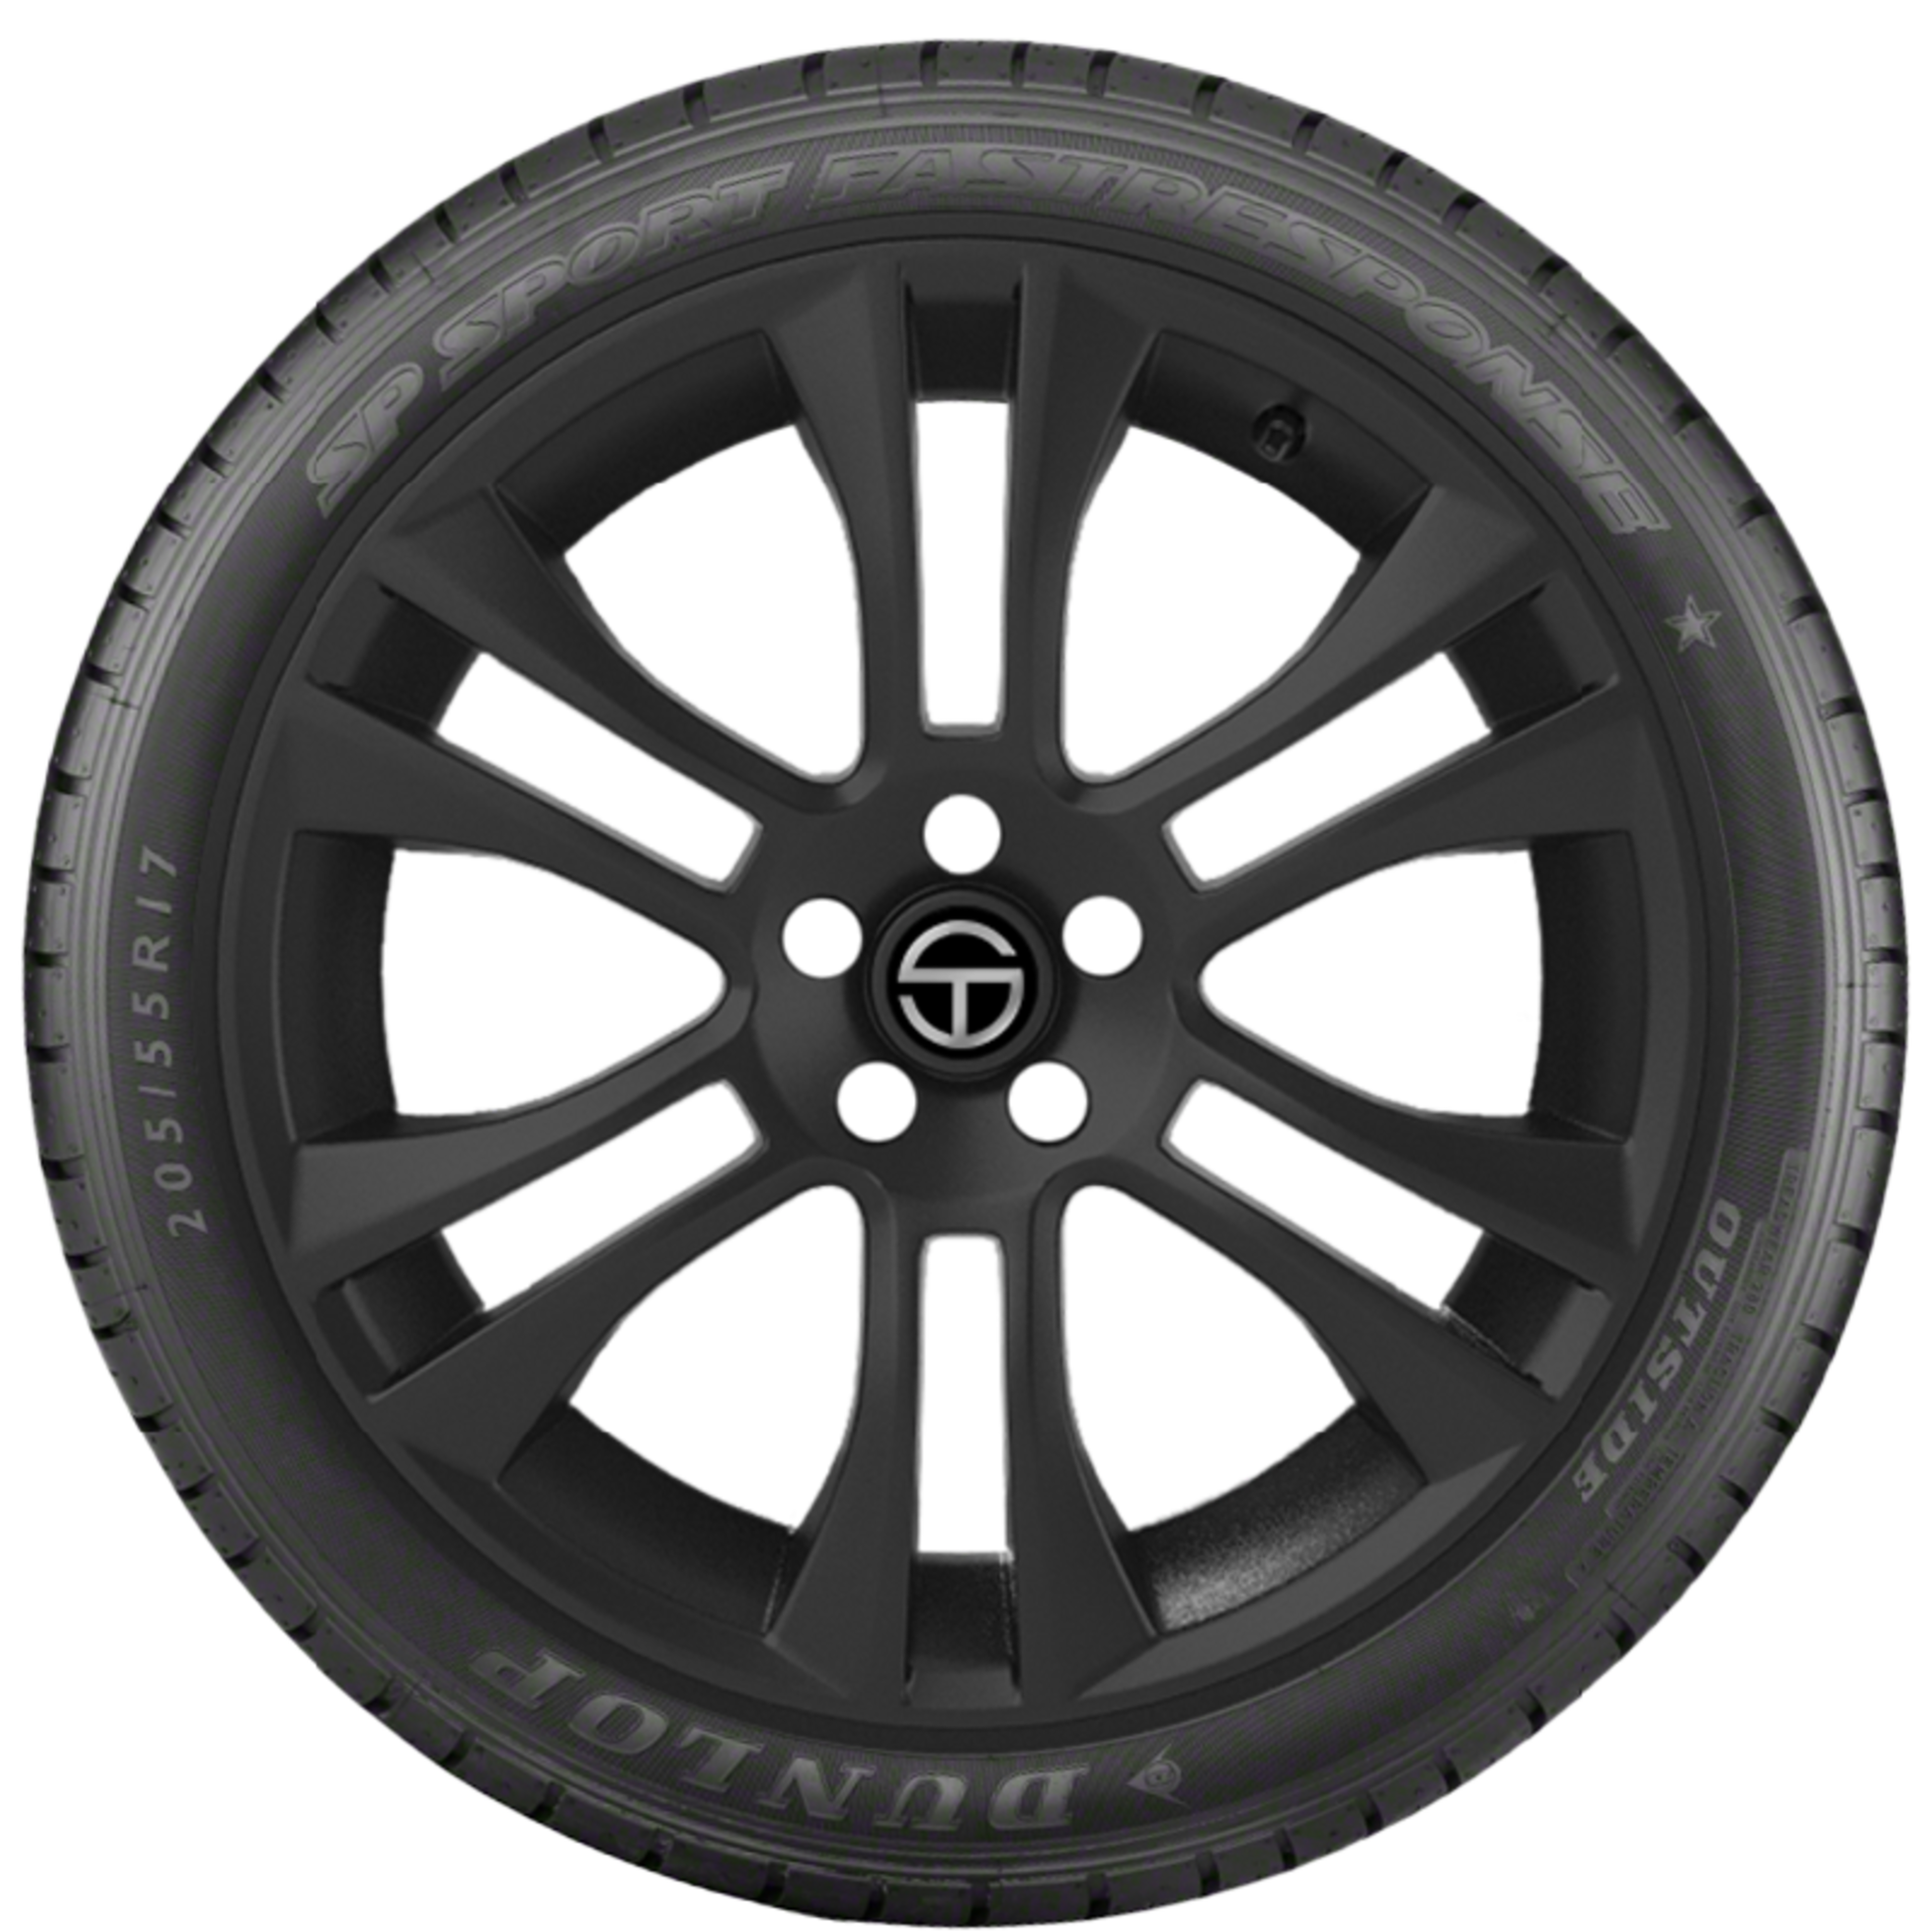 | Sp Online Tires Fast Response Sport SimpleTire Buy Dunlop